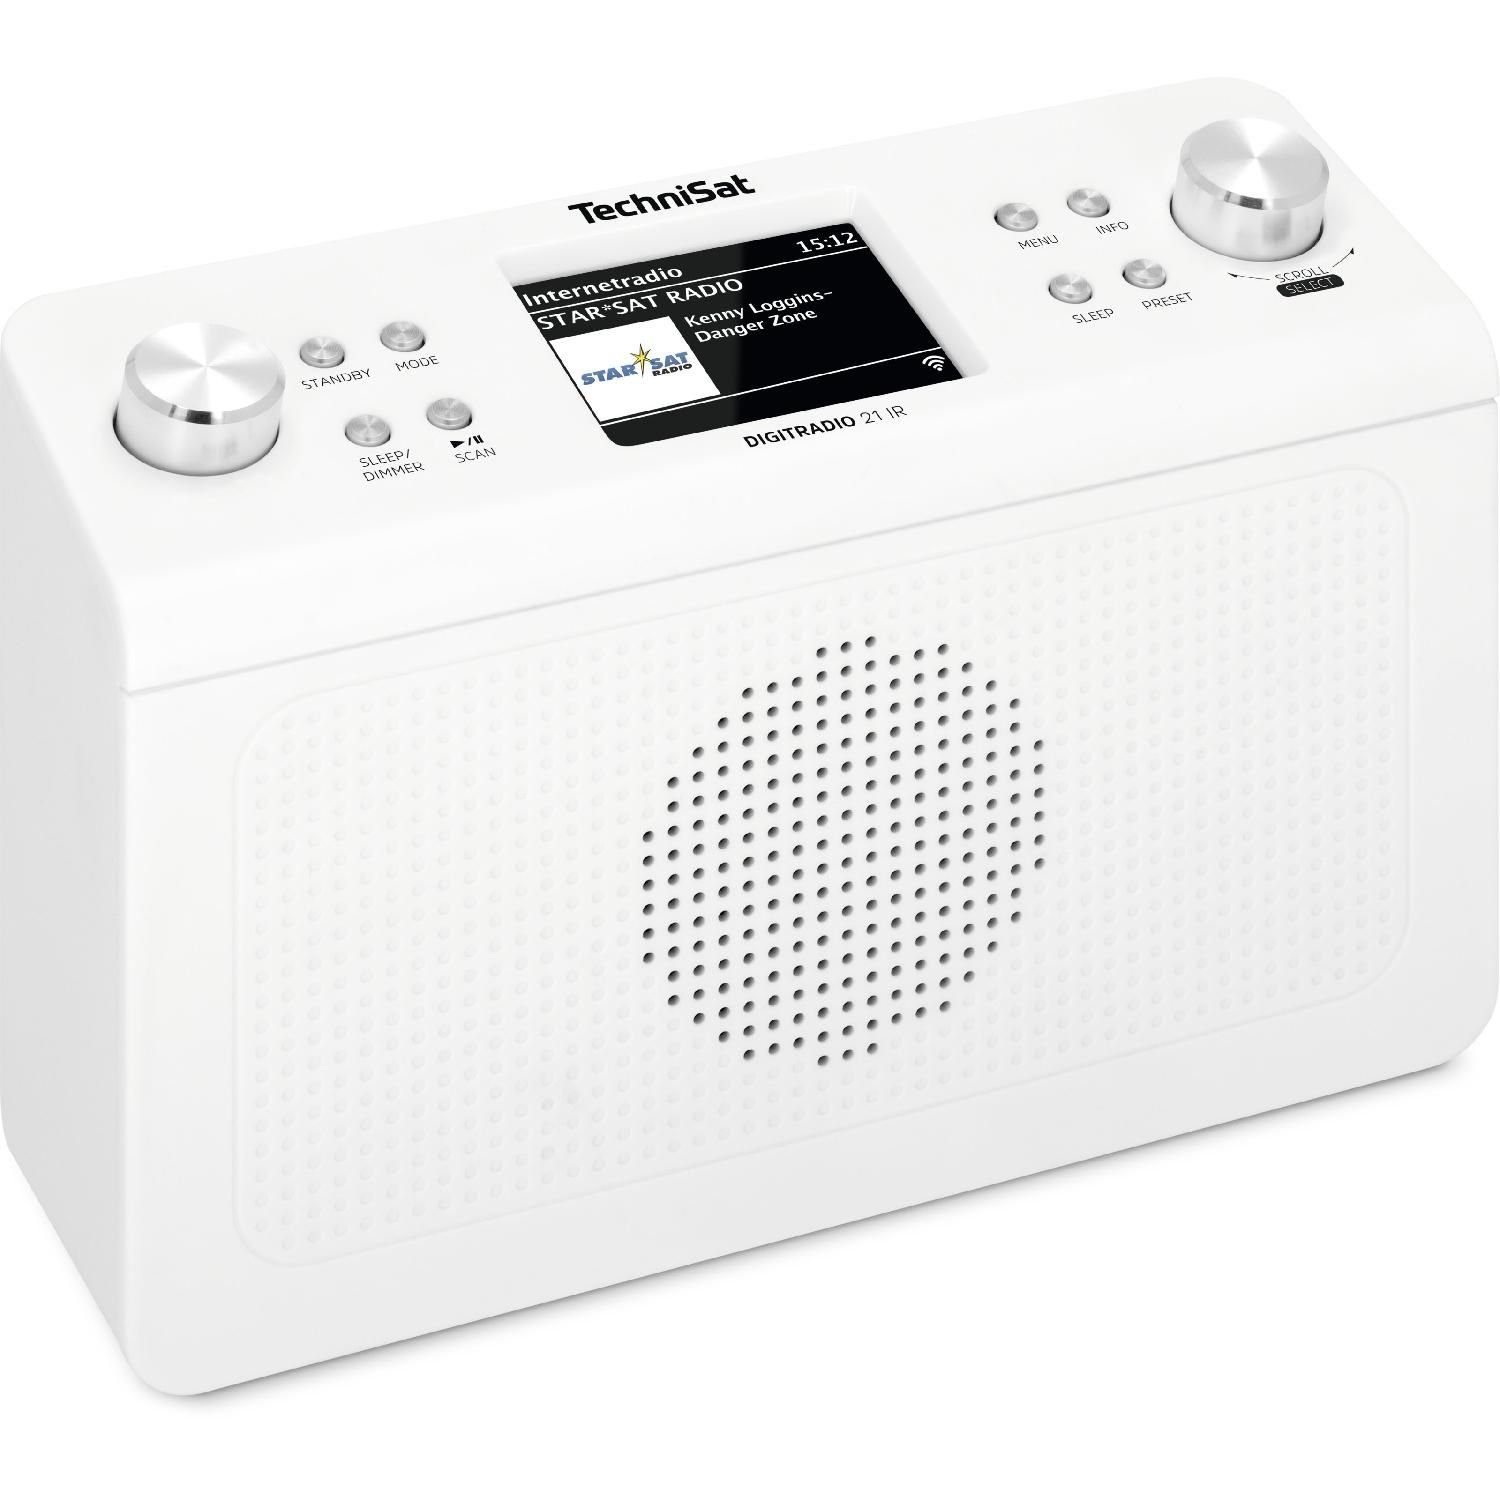 DIGITRADIO TFT-Farbdisplay Digitalradio, 2,8" TechniSat UKW-Radio, Digitalradio DAB+ weiß (DAB) Bluetooth (Bluetooth, 21 IR TFT) DAB+ Digitalradio